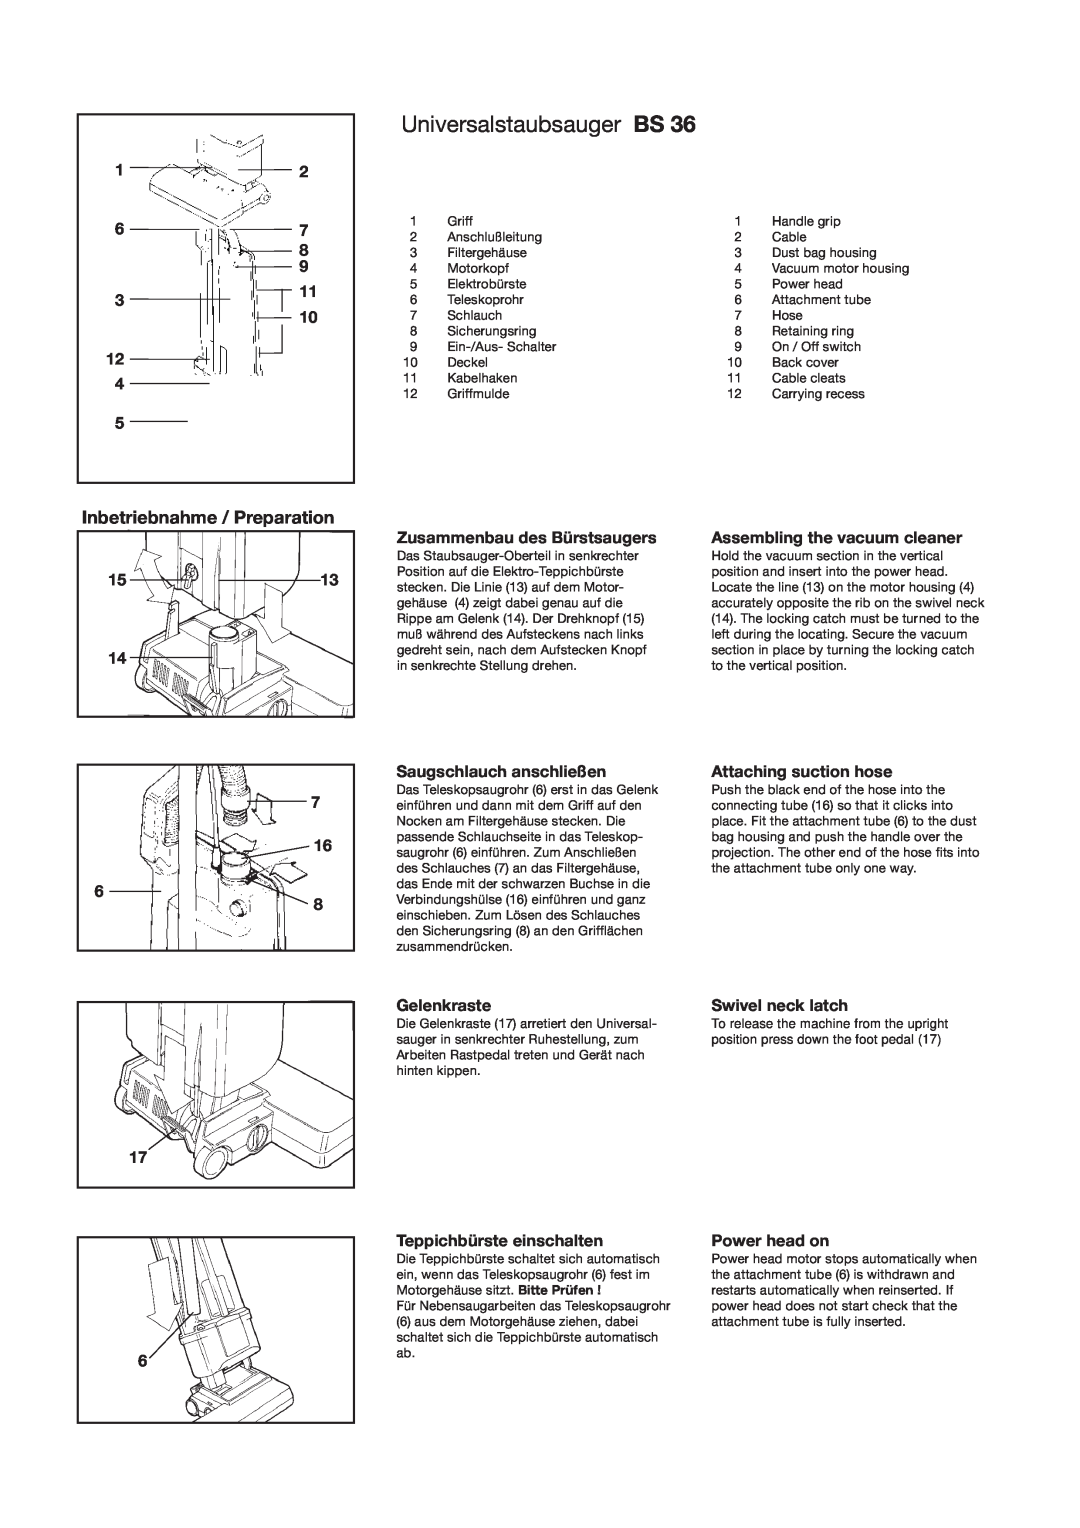 Sebo BS 36 manual Inbetriebnahme / Preparation, Universalstaubsauger BS 